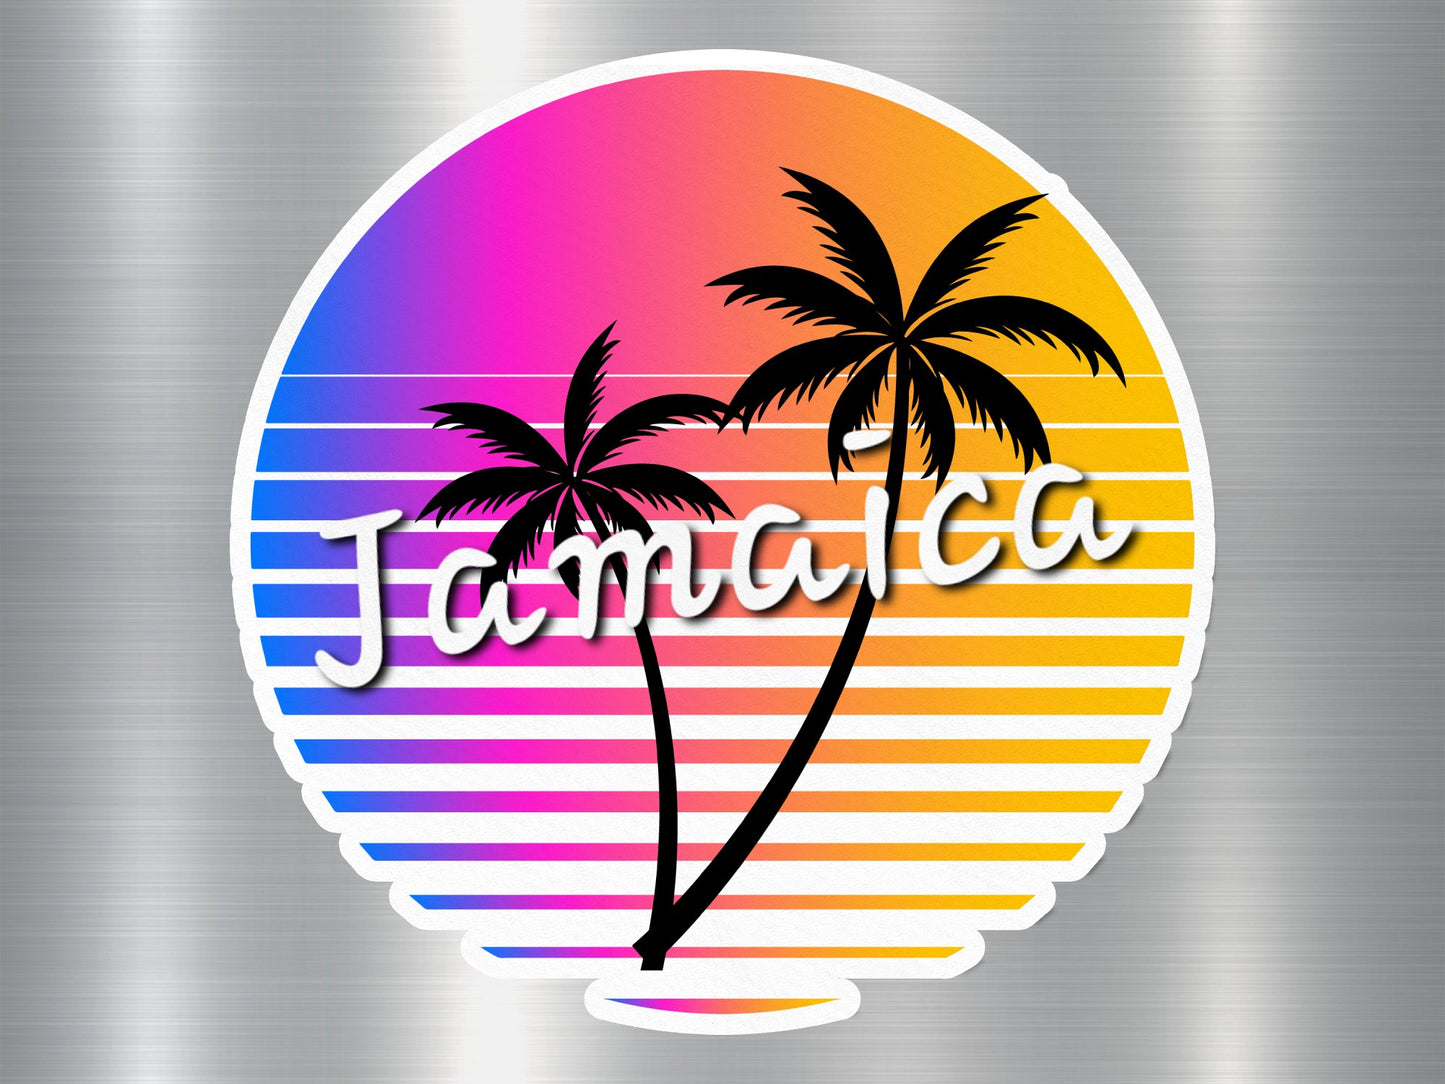 Jamaica Sticker